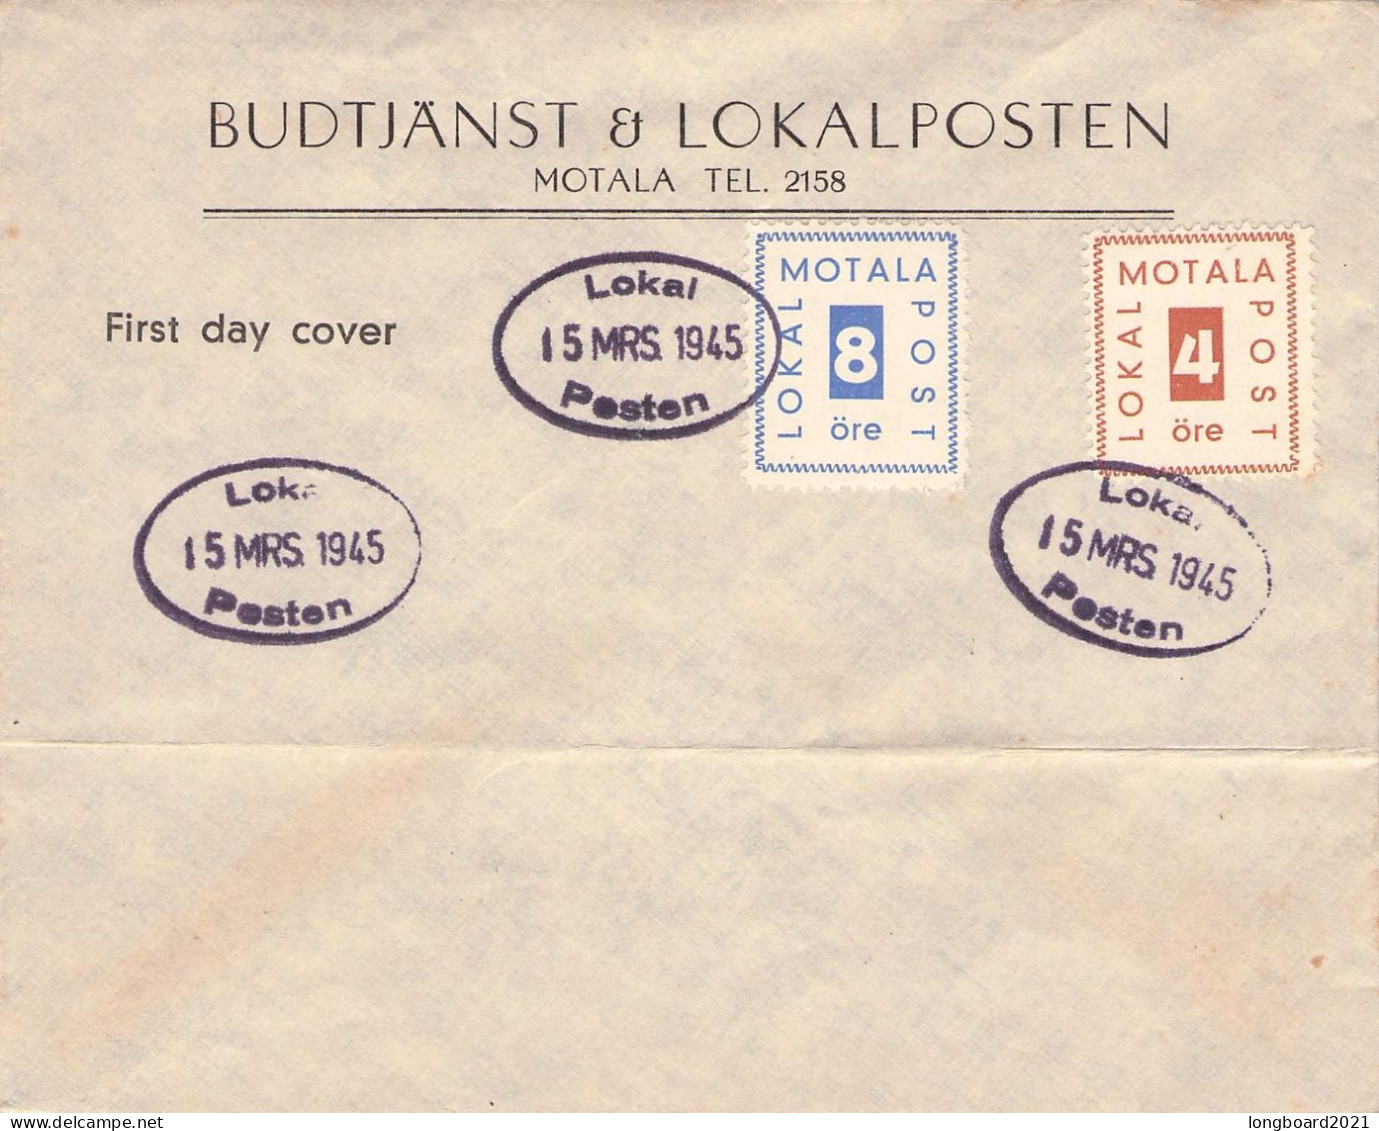 SWEDEN - LOKAL POSTEN - FDC 15.3.1945 MOTALA / *327 - Local Post Stamps